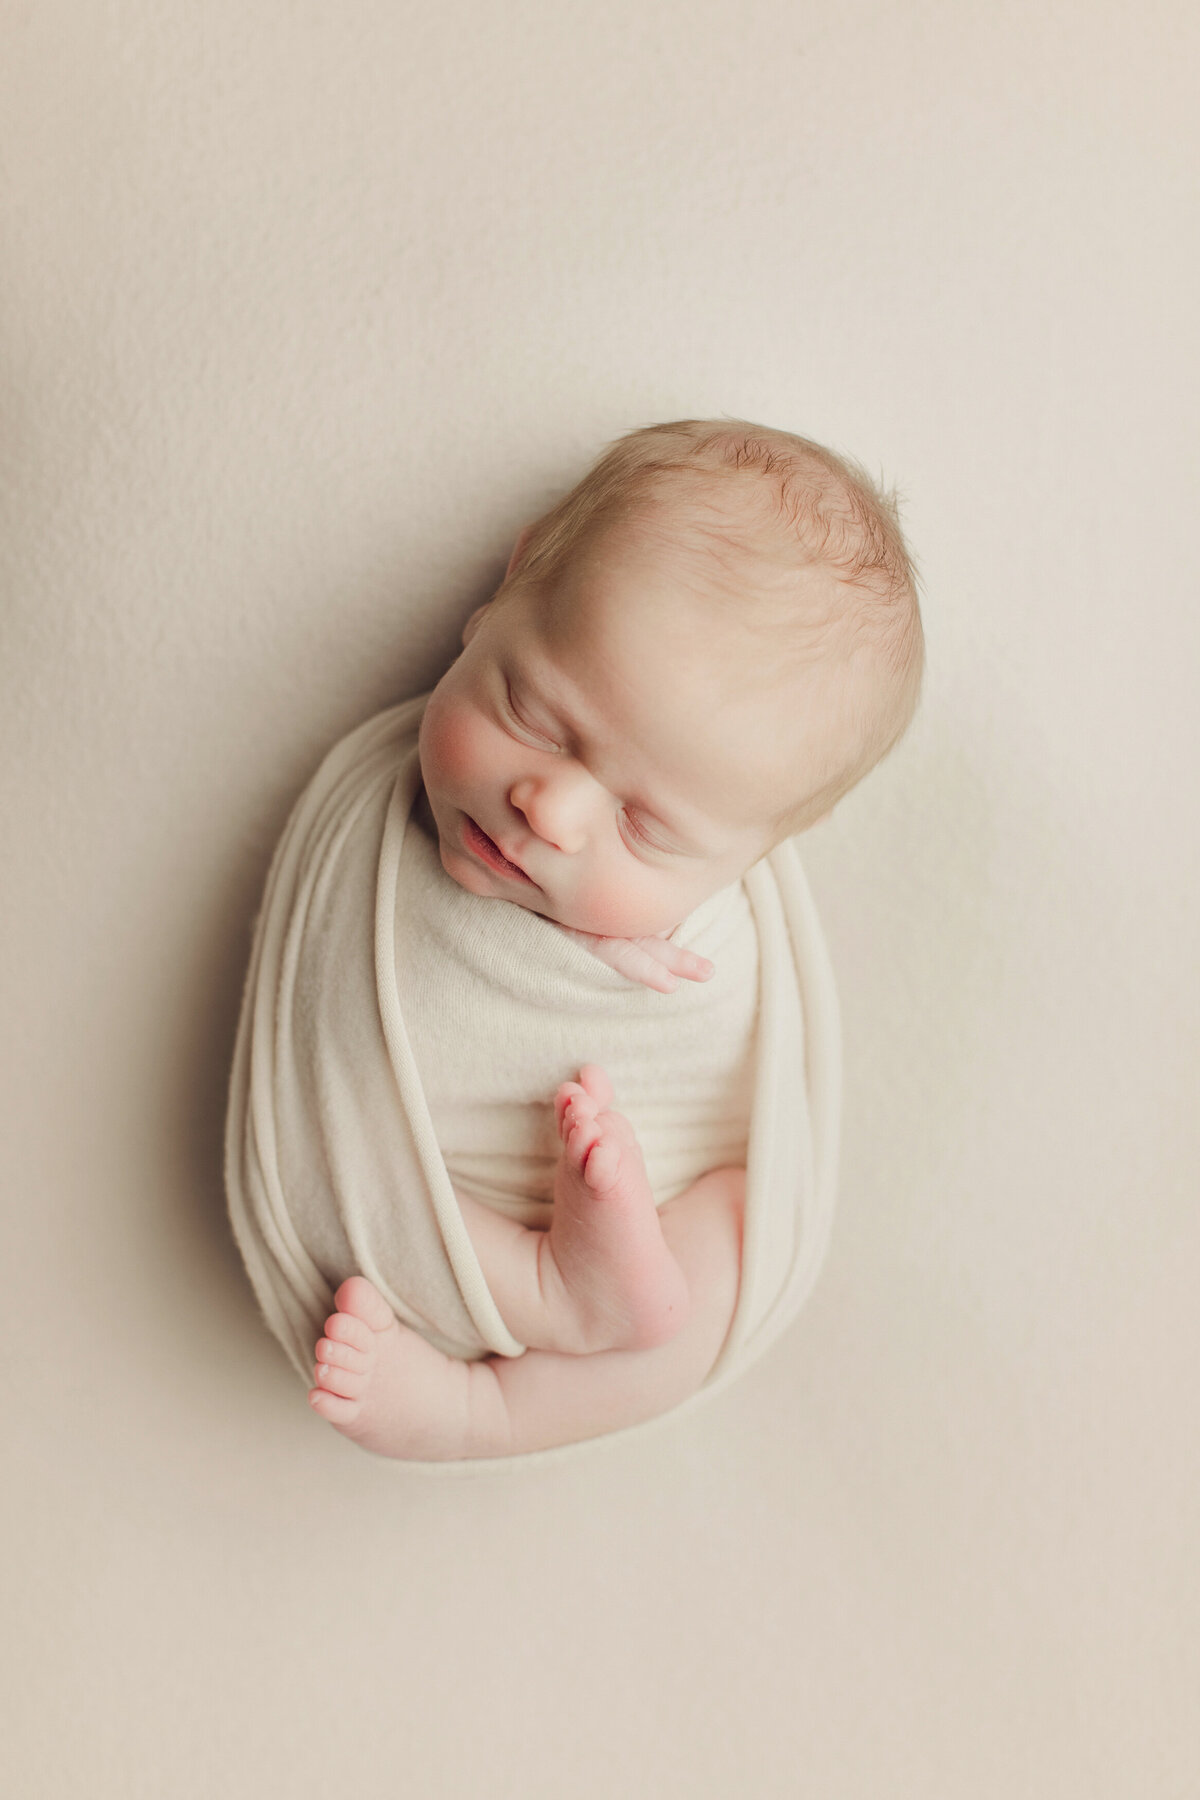 newborn baby sleeping on cream background